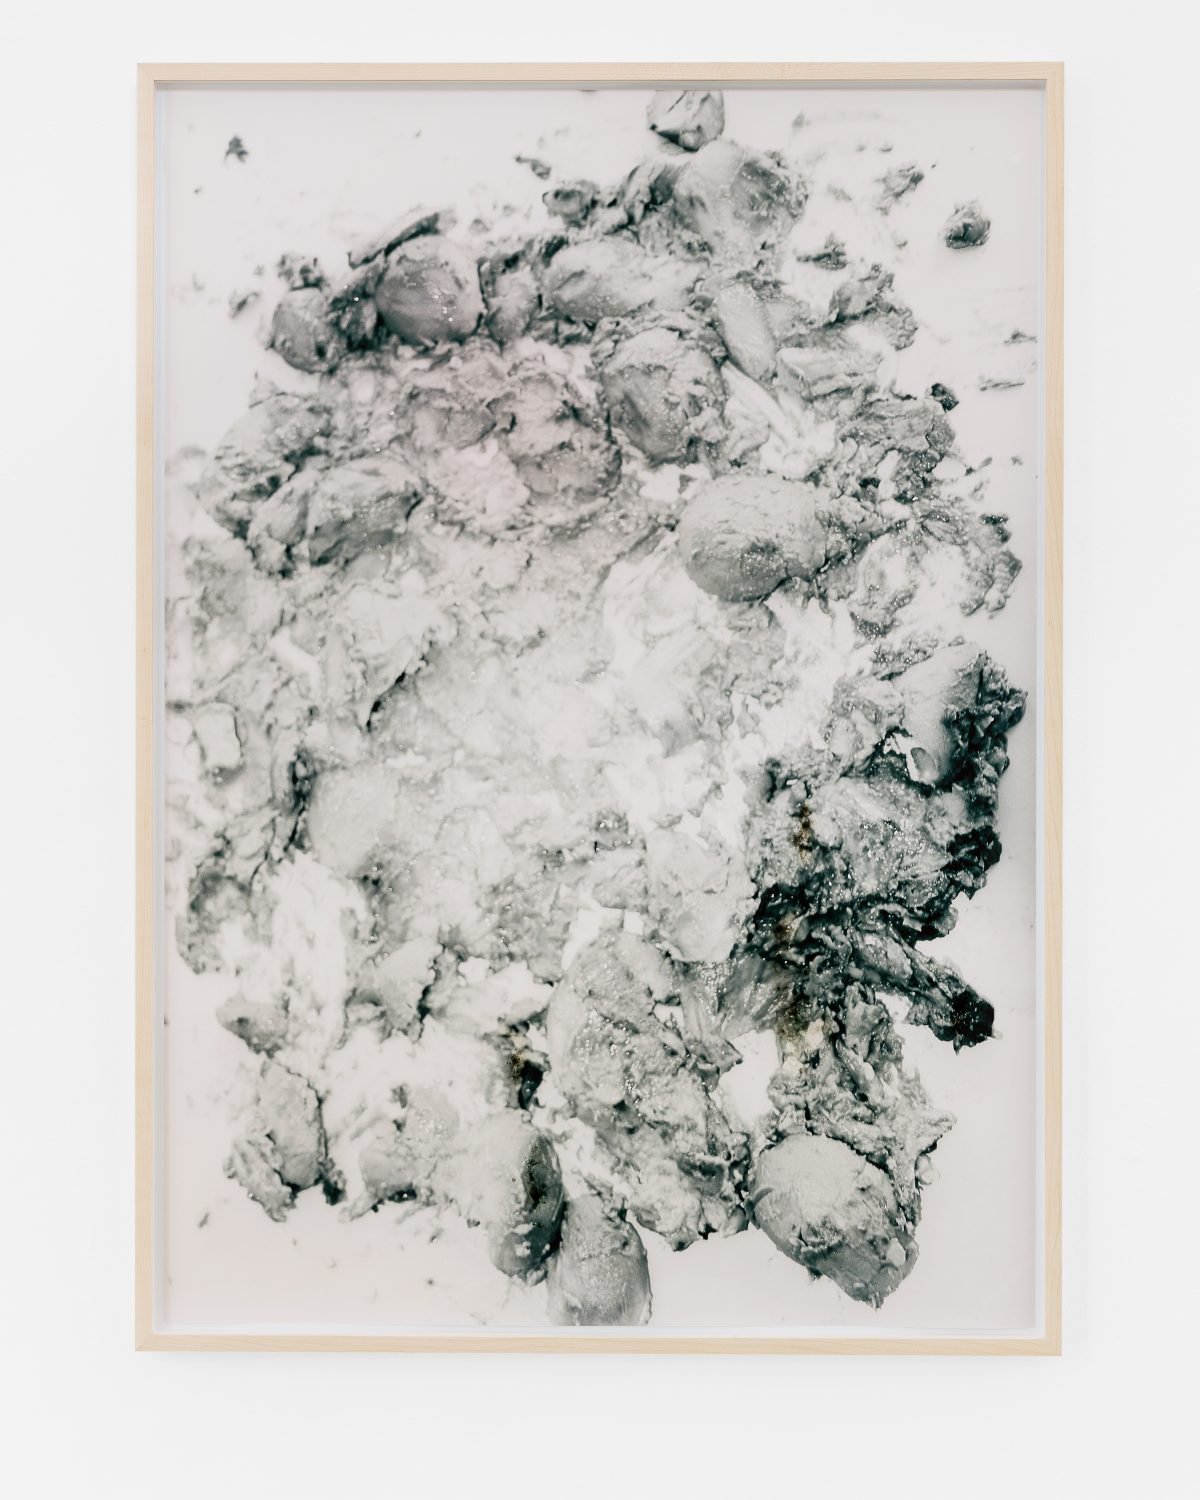 Lisa HolzerGuts, 2019Pigment print on cotton paper, acrylic paint on glass110.3 x 76 cm